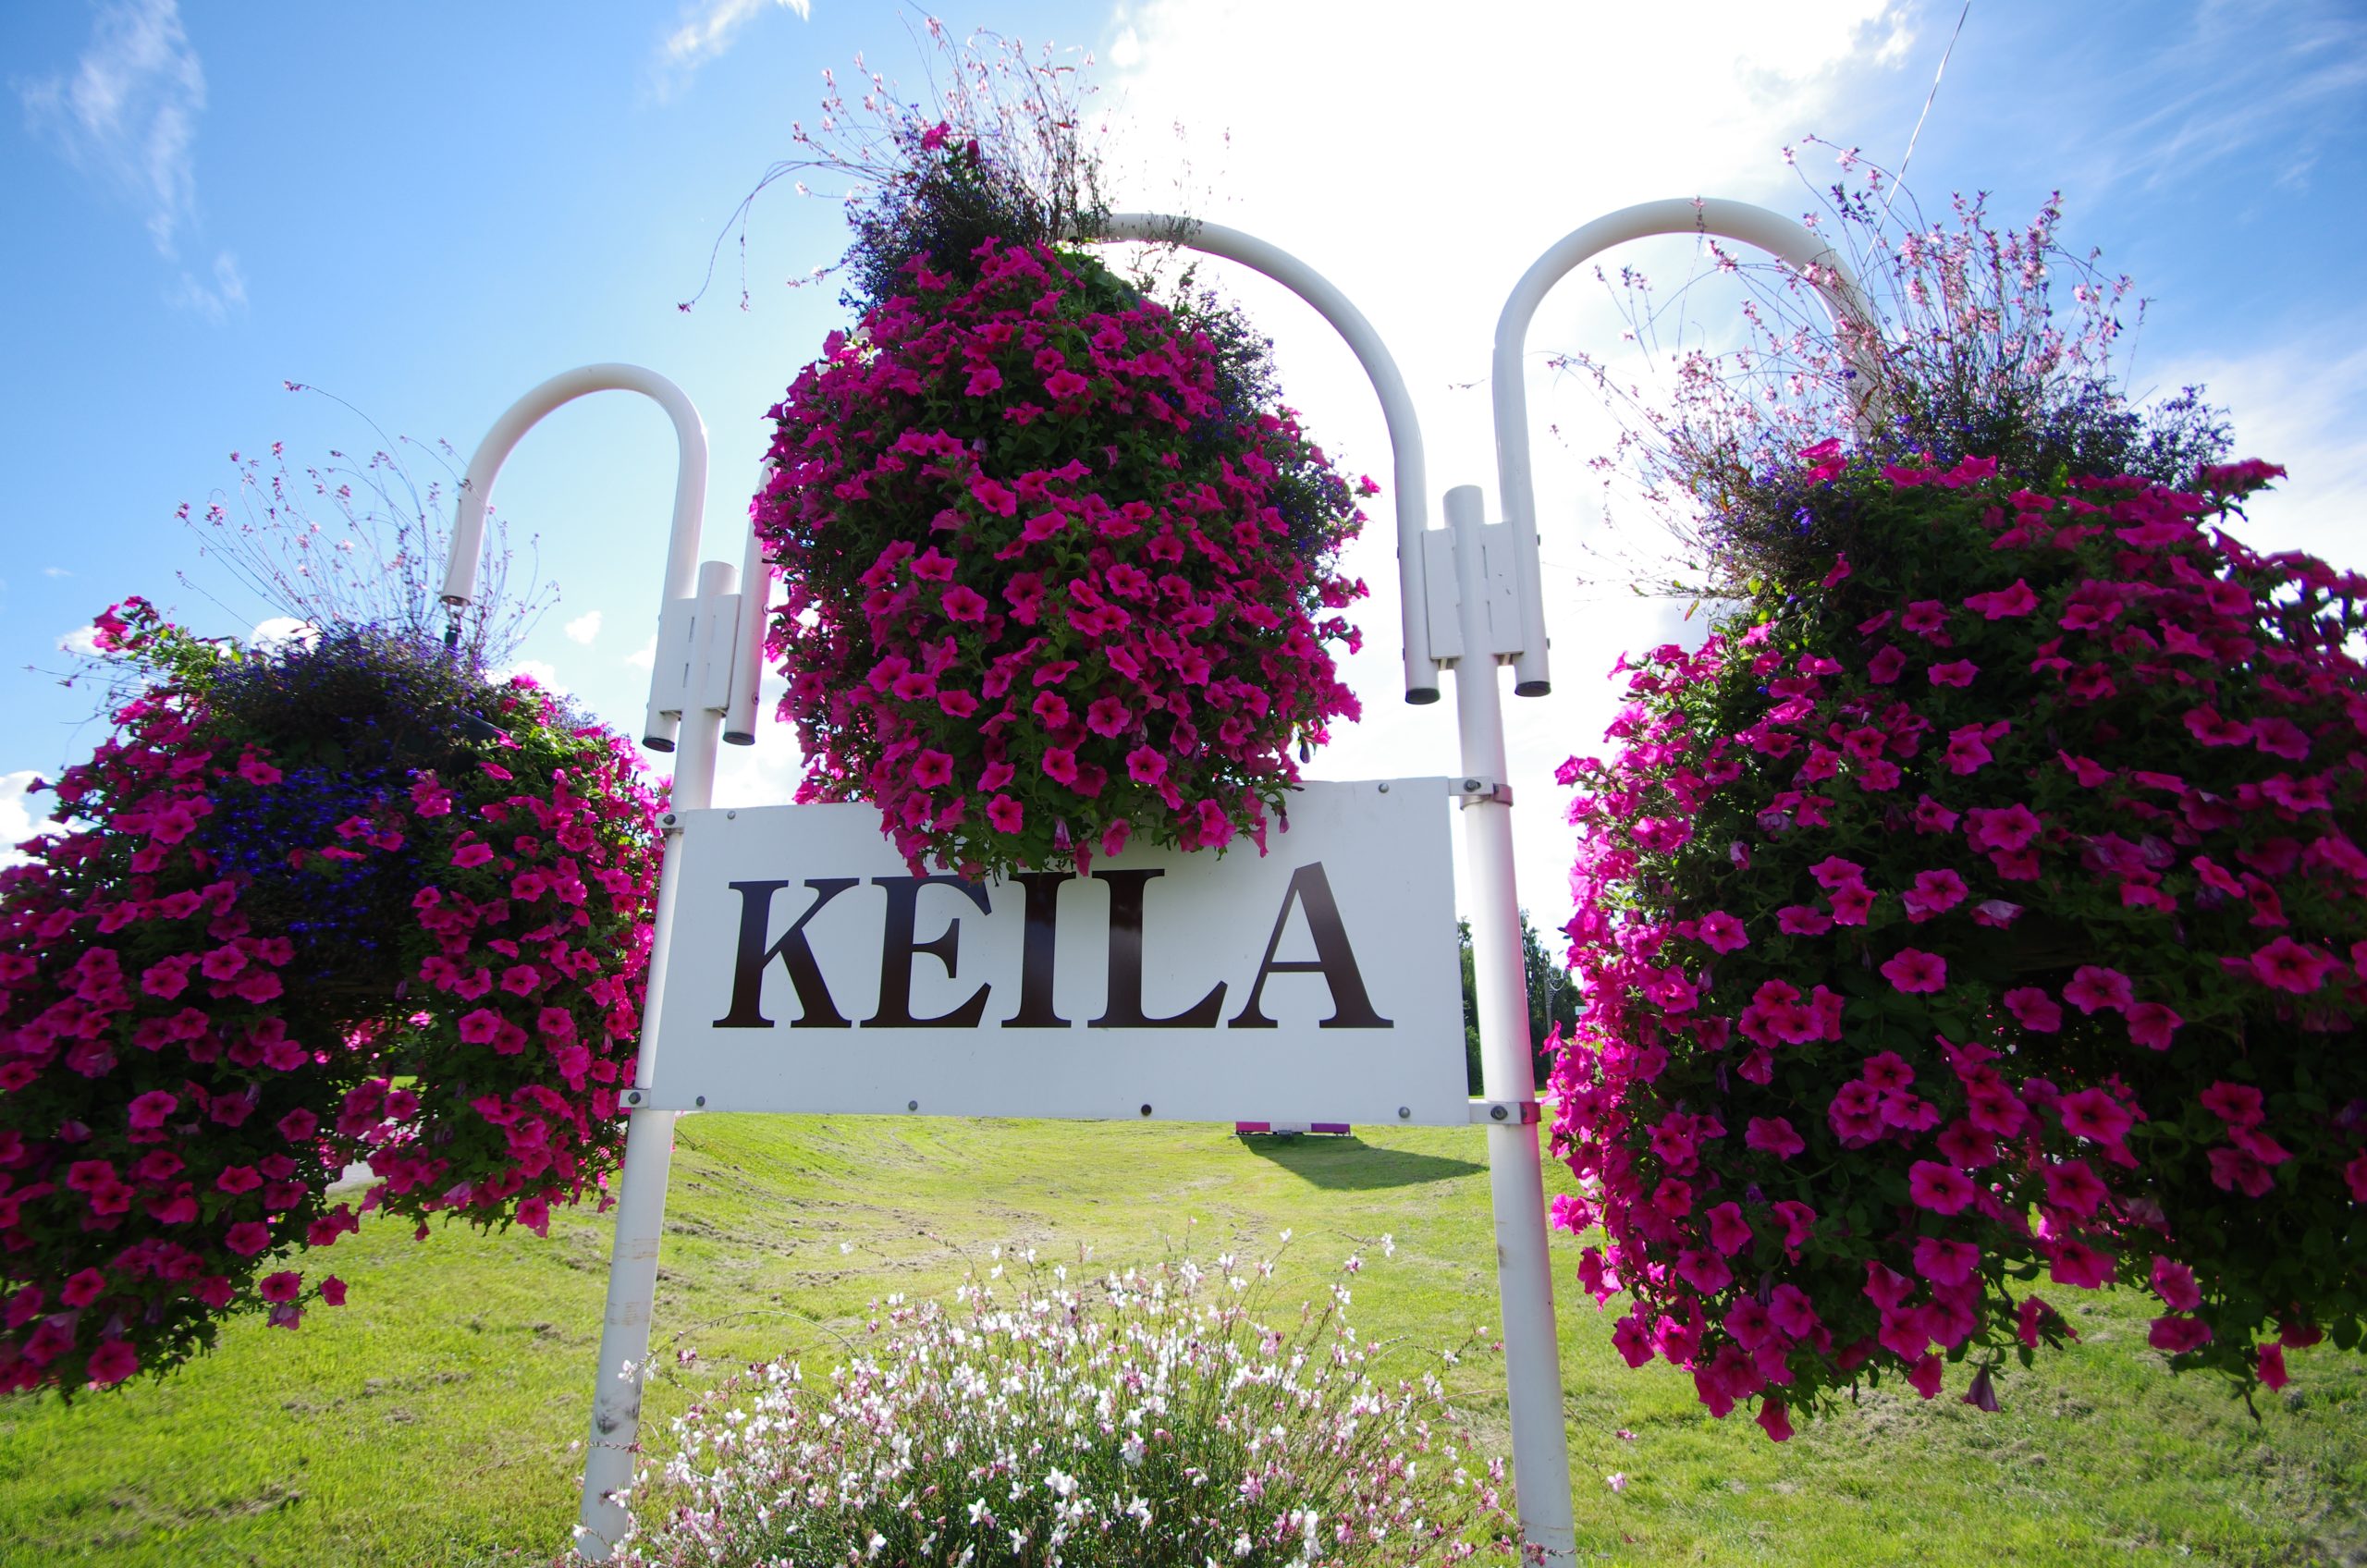 Keila Town